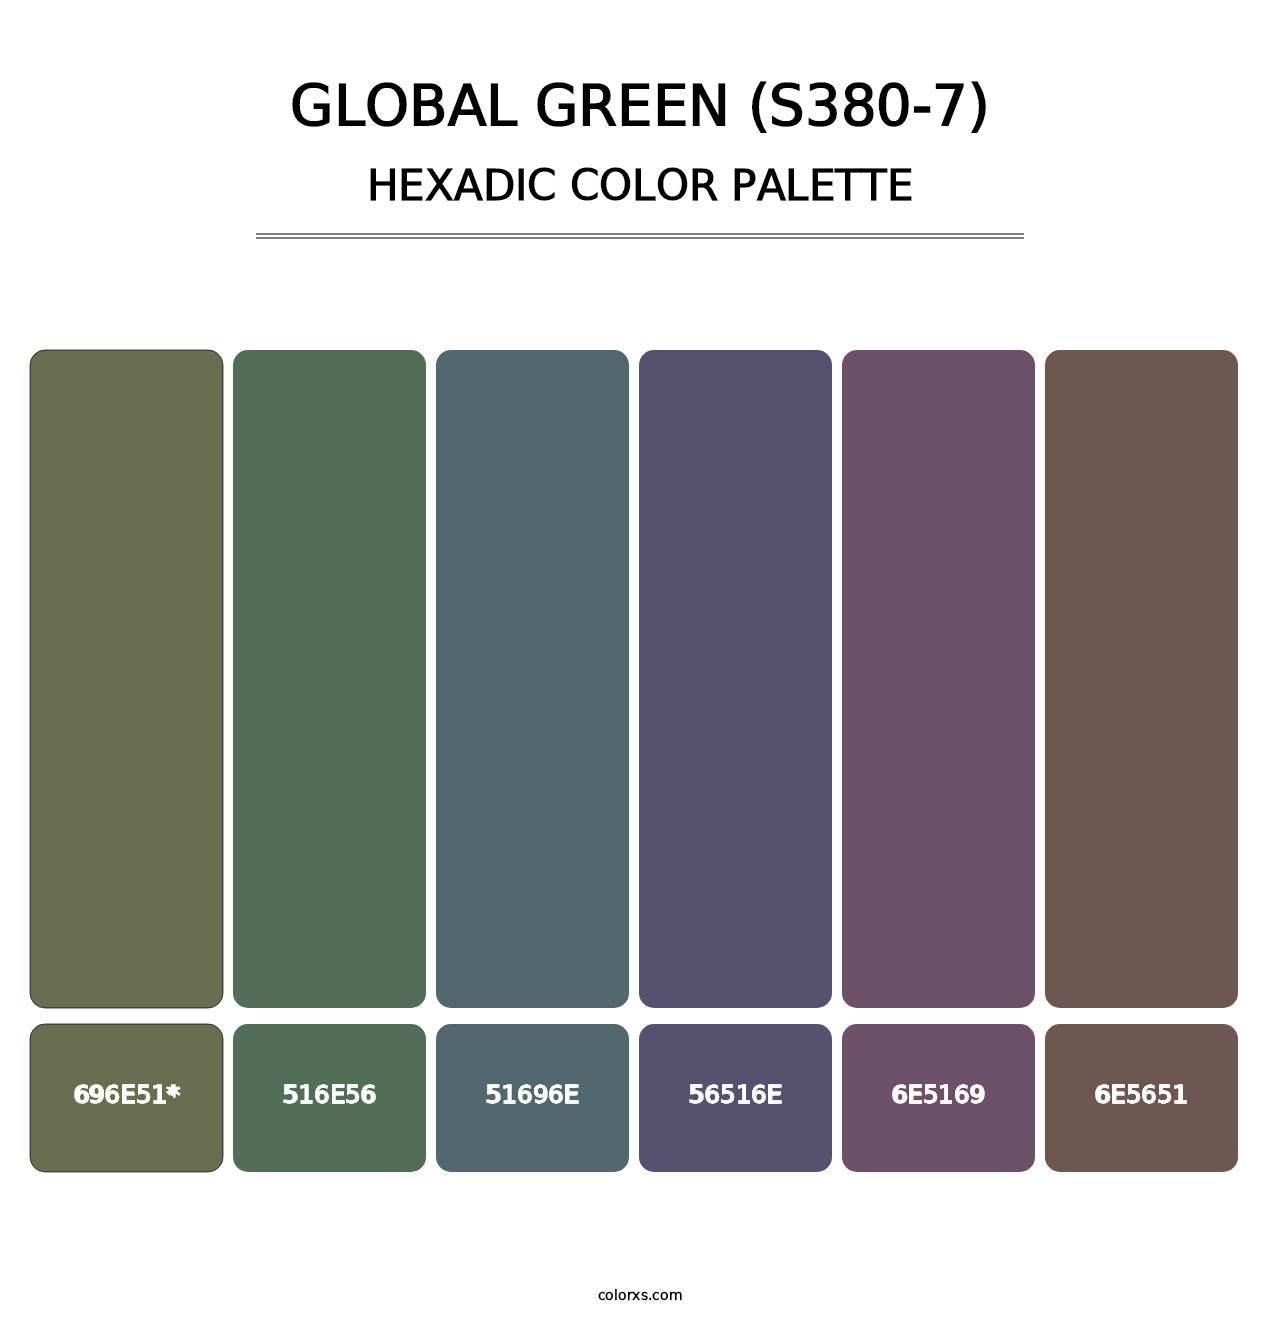 Global Green (S380-7) - Hexadic Color Palette